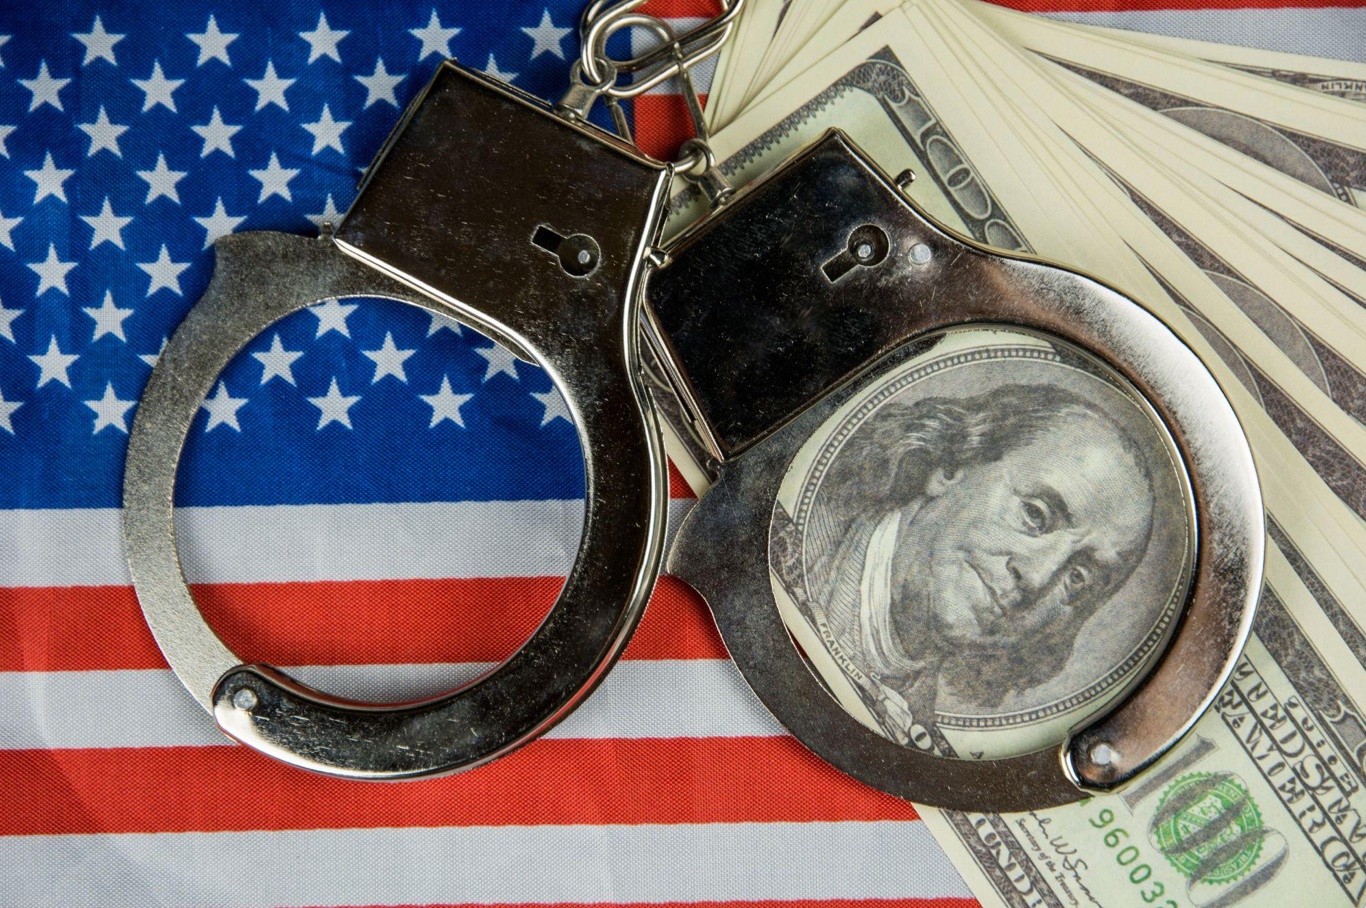 USA flag with handcuffs and a bundle of dollars; image by Bermix Studio, via Unsplash.com.